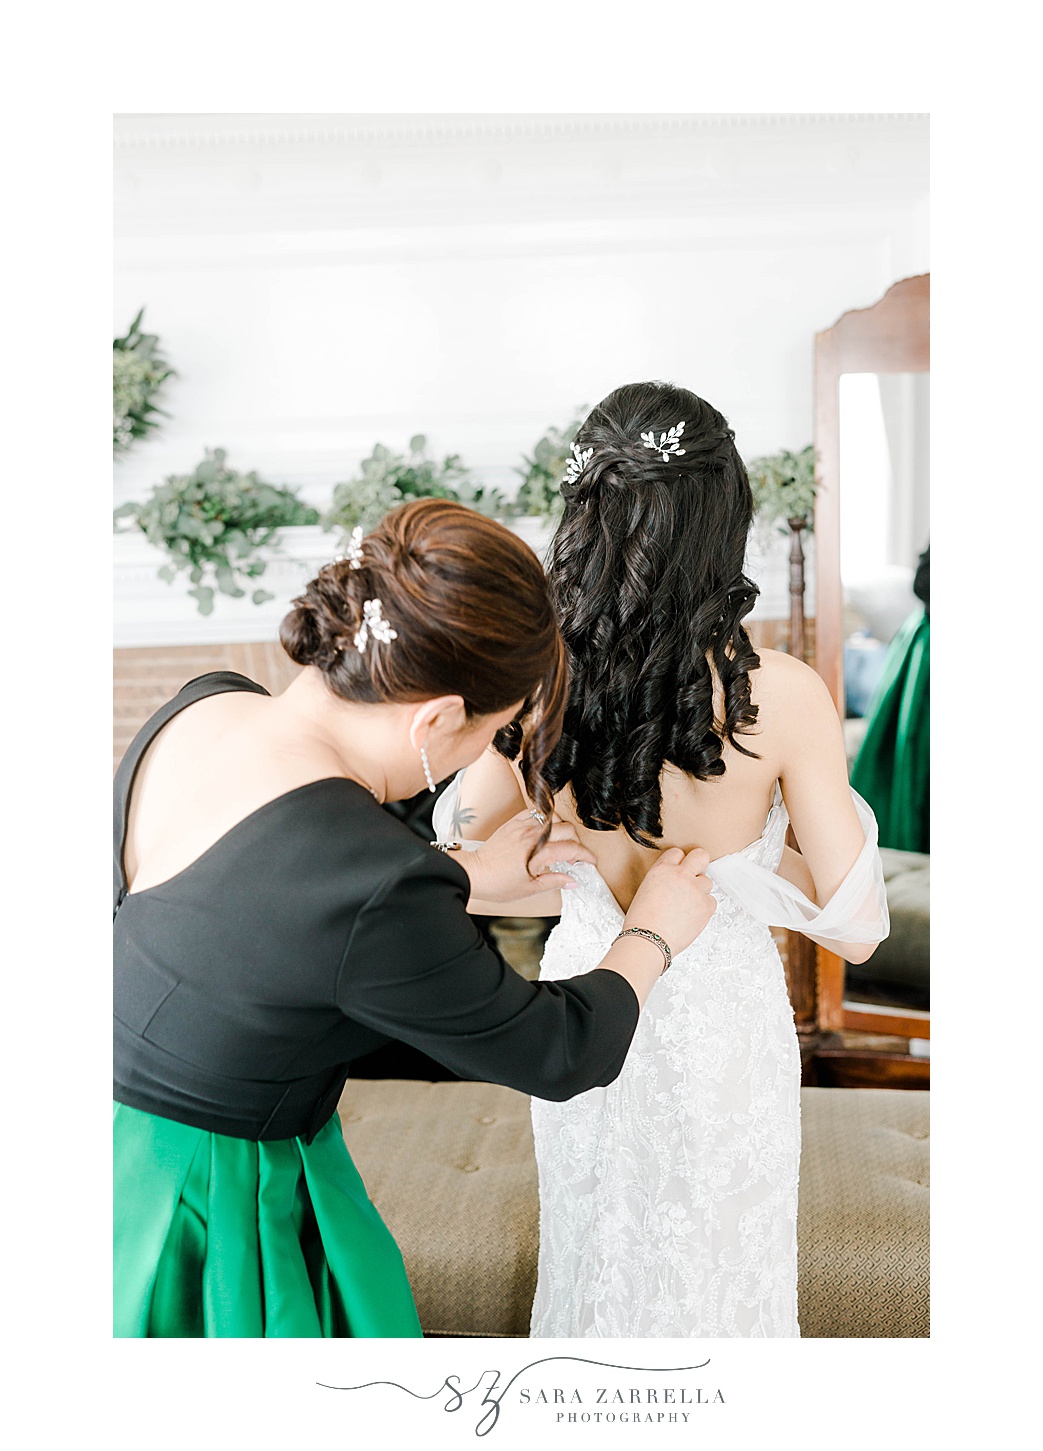 mom helps bride into wedding dress at OceanCliff Hotel bridal suite 